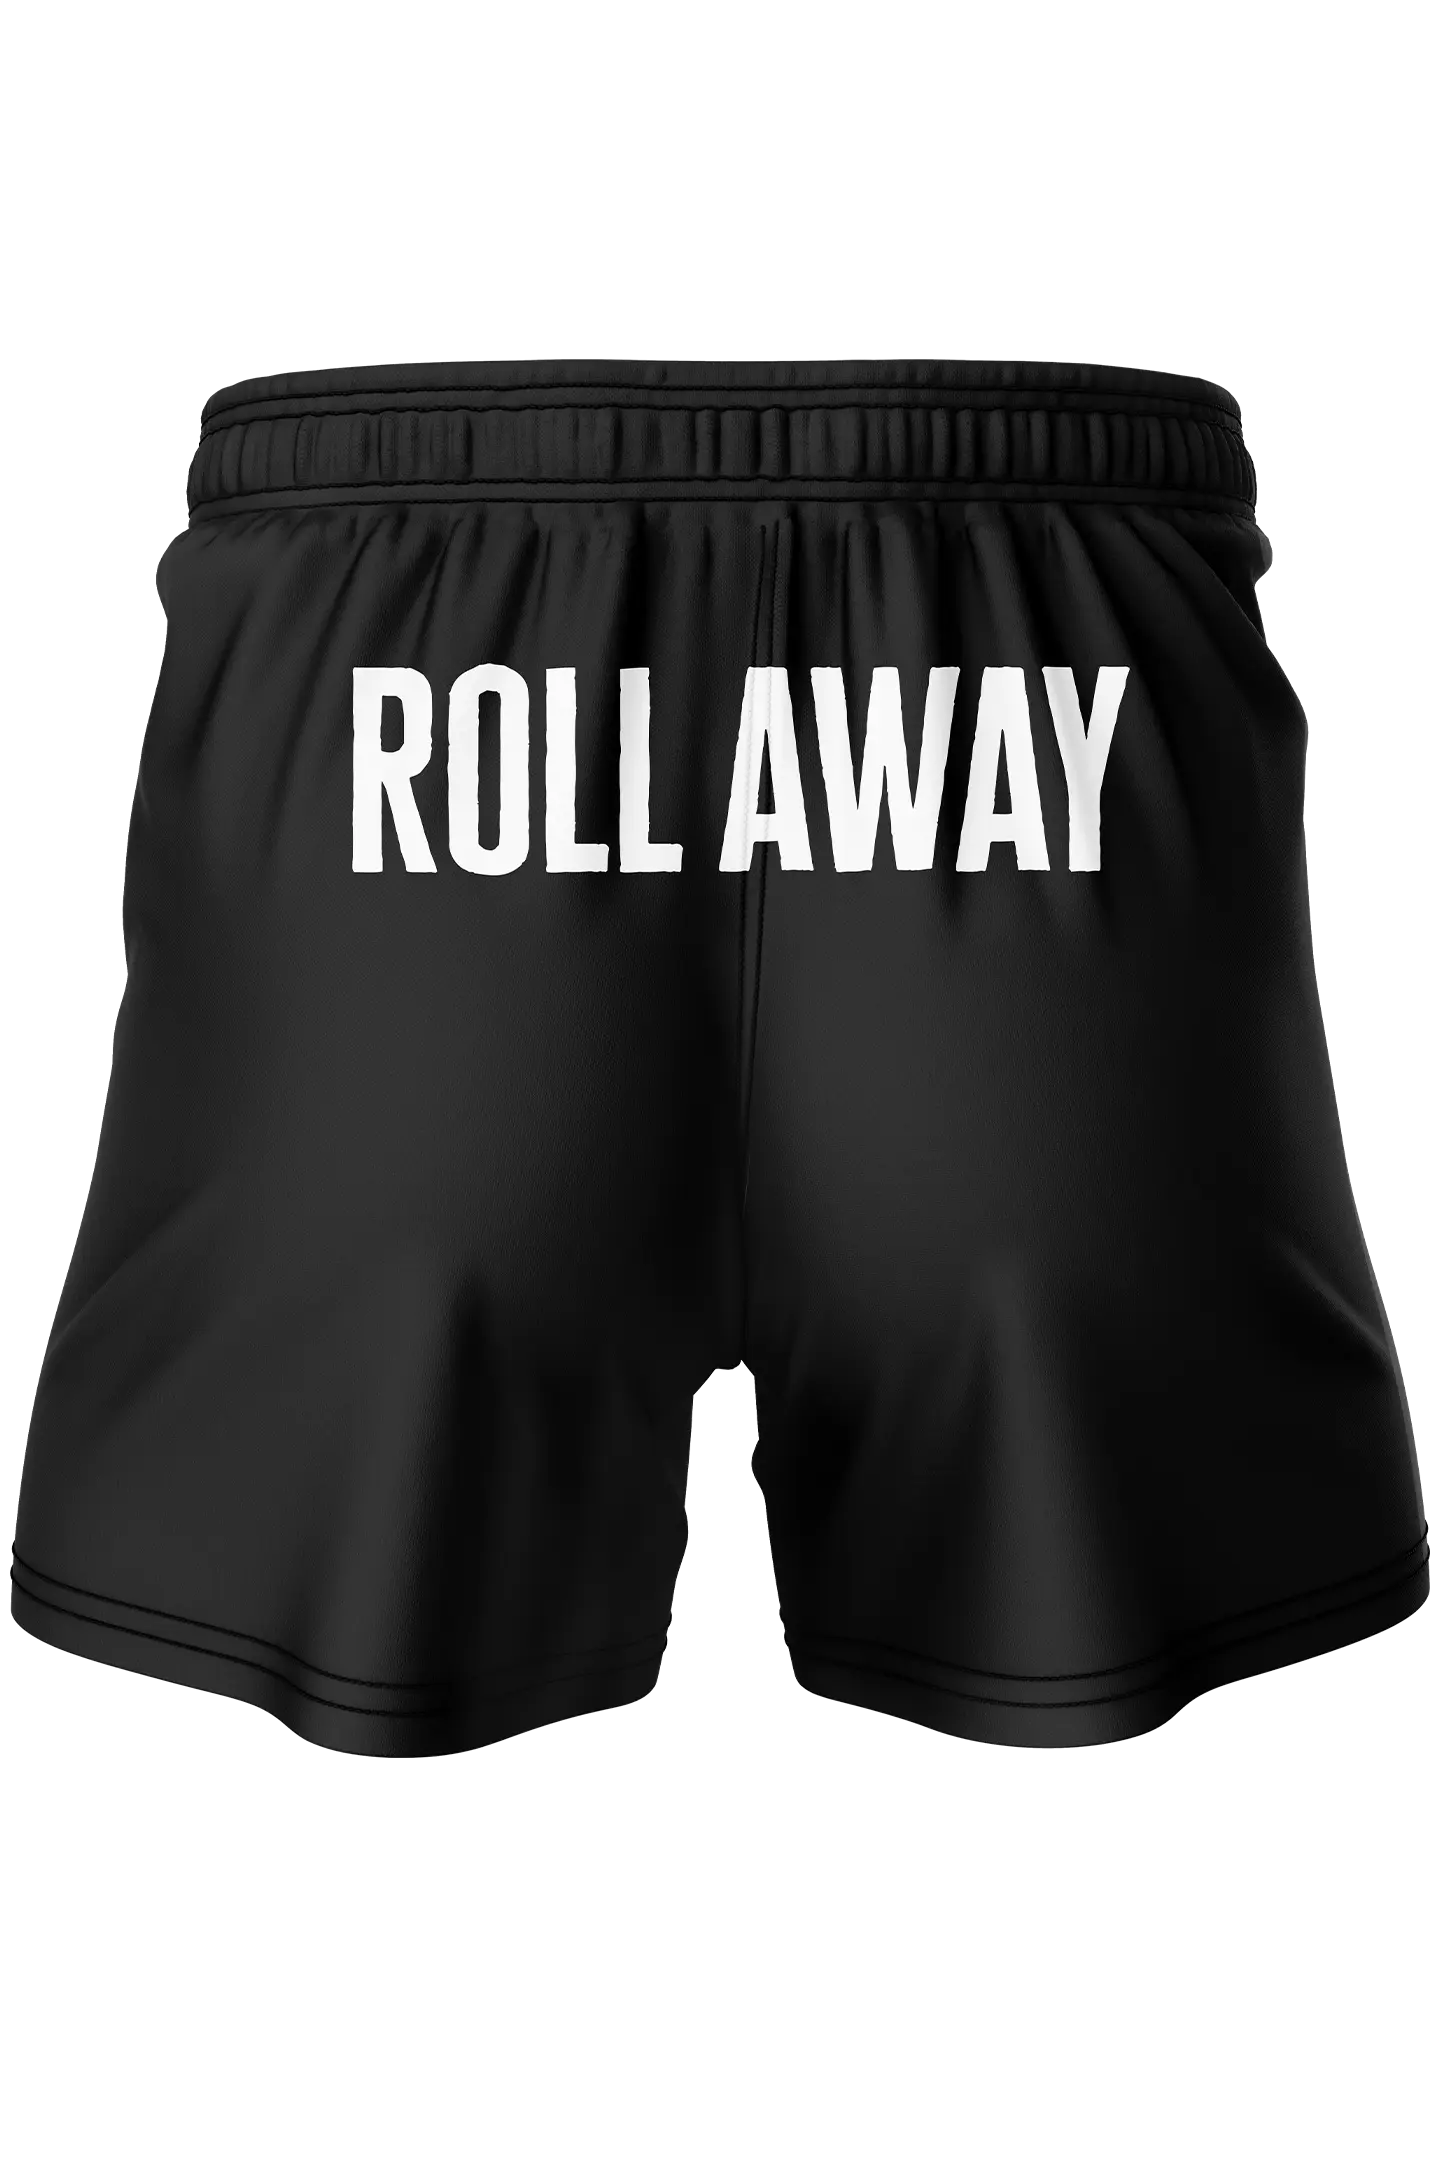 Copy of Roll Away - Elastic Waist Shorts GenXRefined